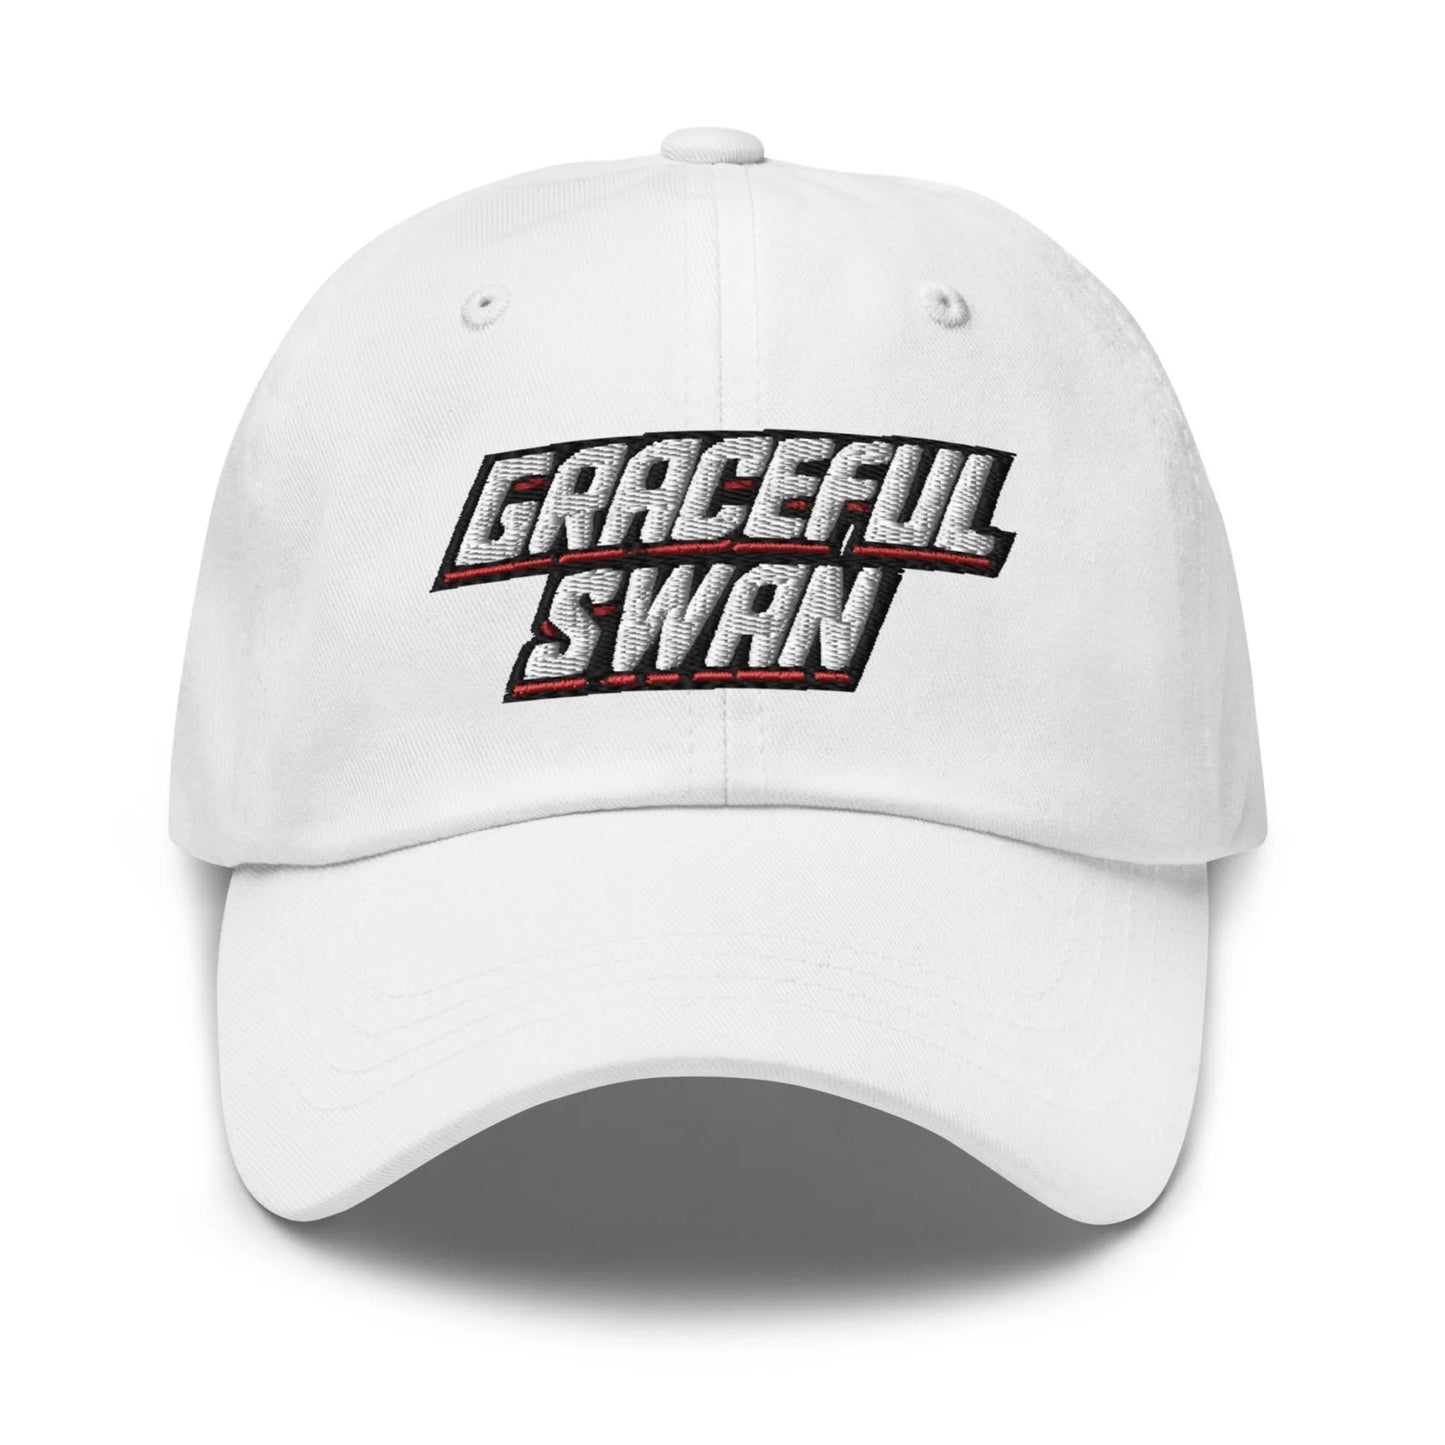 Graceful Swan ShowZone baseball dad hat in white